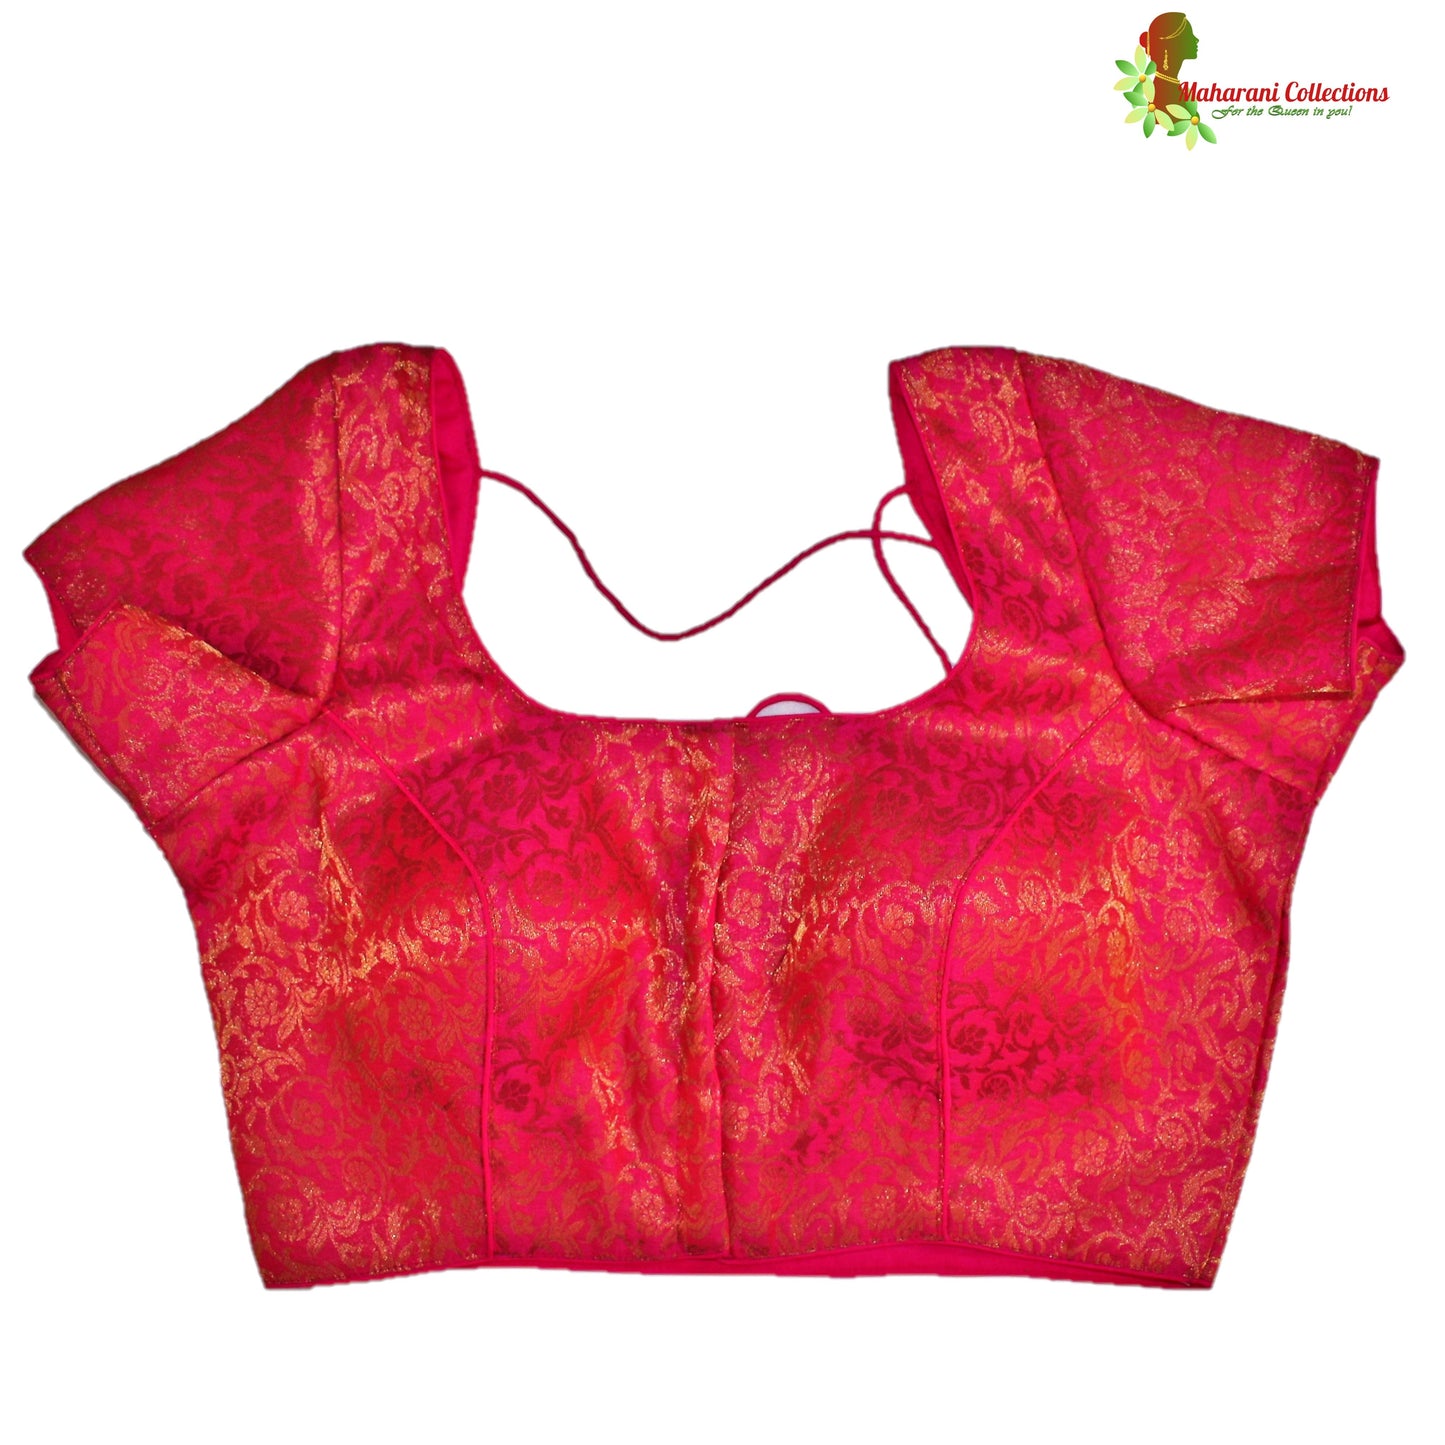 Maharani's Pure Banarasi Silk Saree - Pink (with Stitched Blouse and Petticoat)